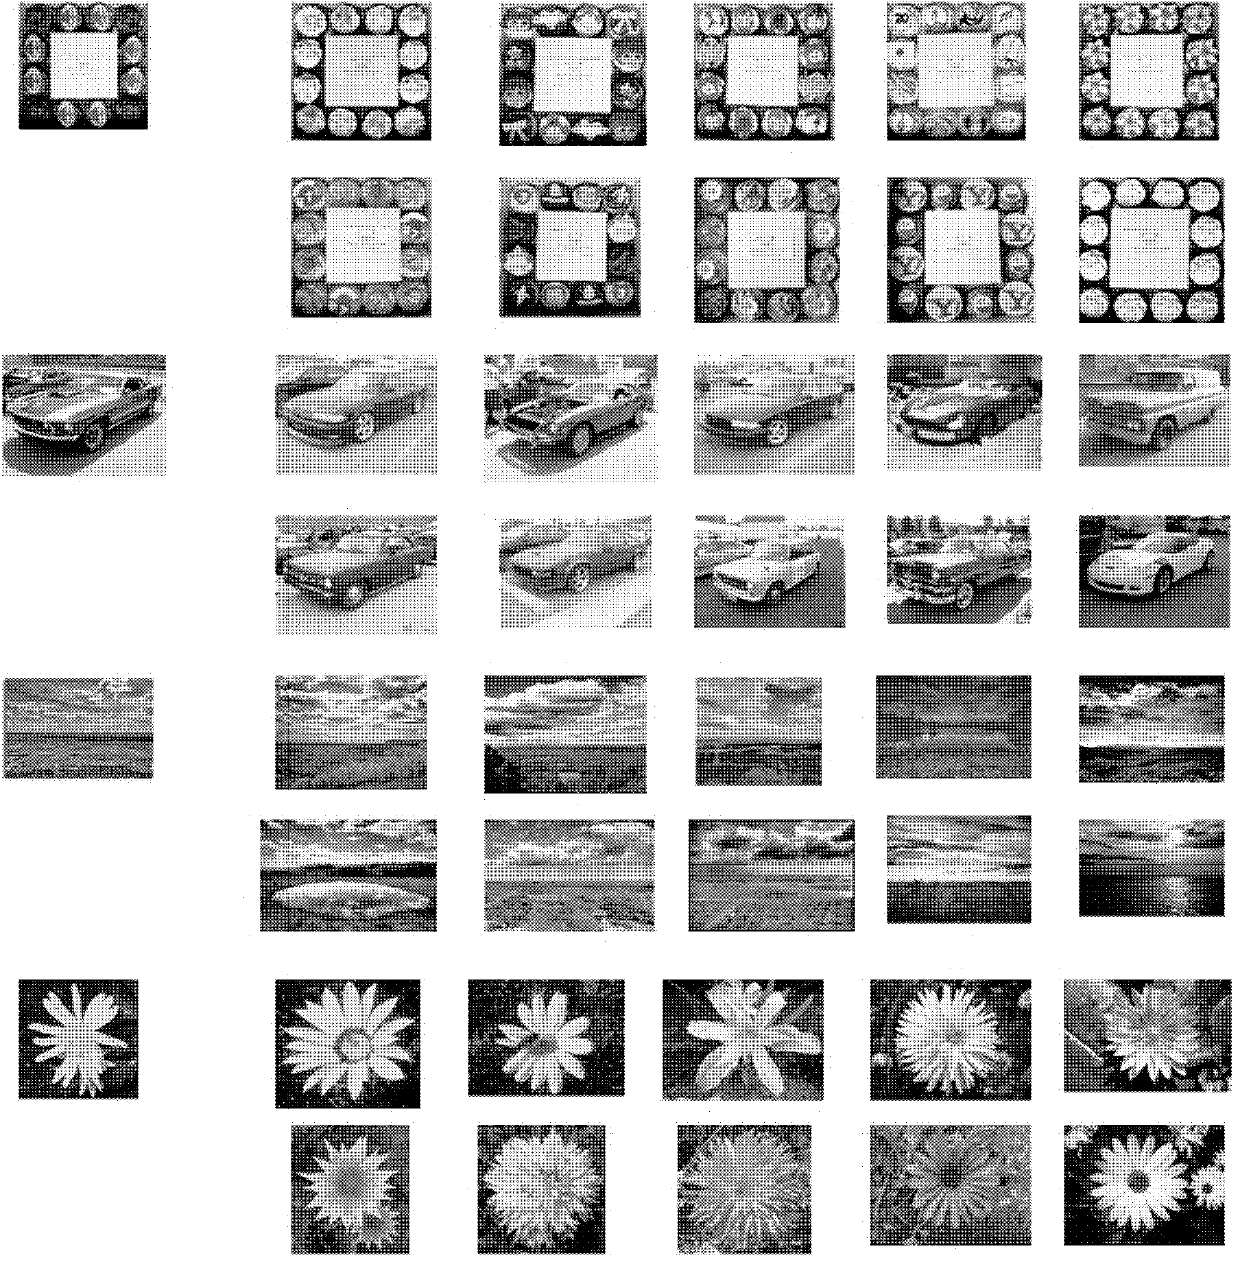 Large-scale image library retrieval method based on local similarity hash algorithm